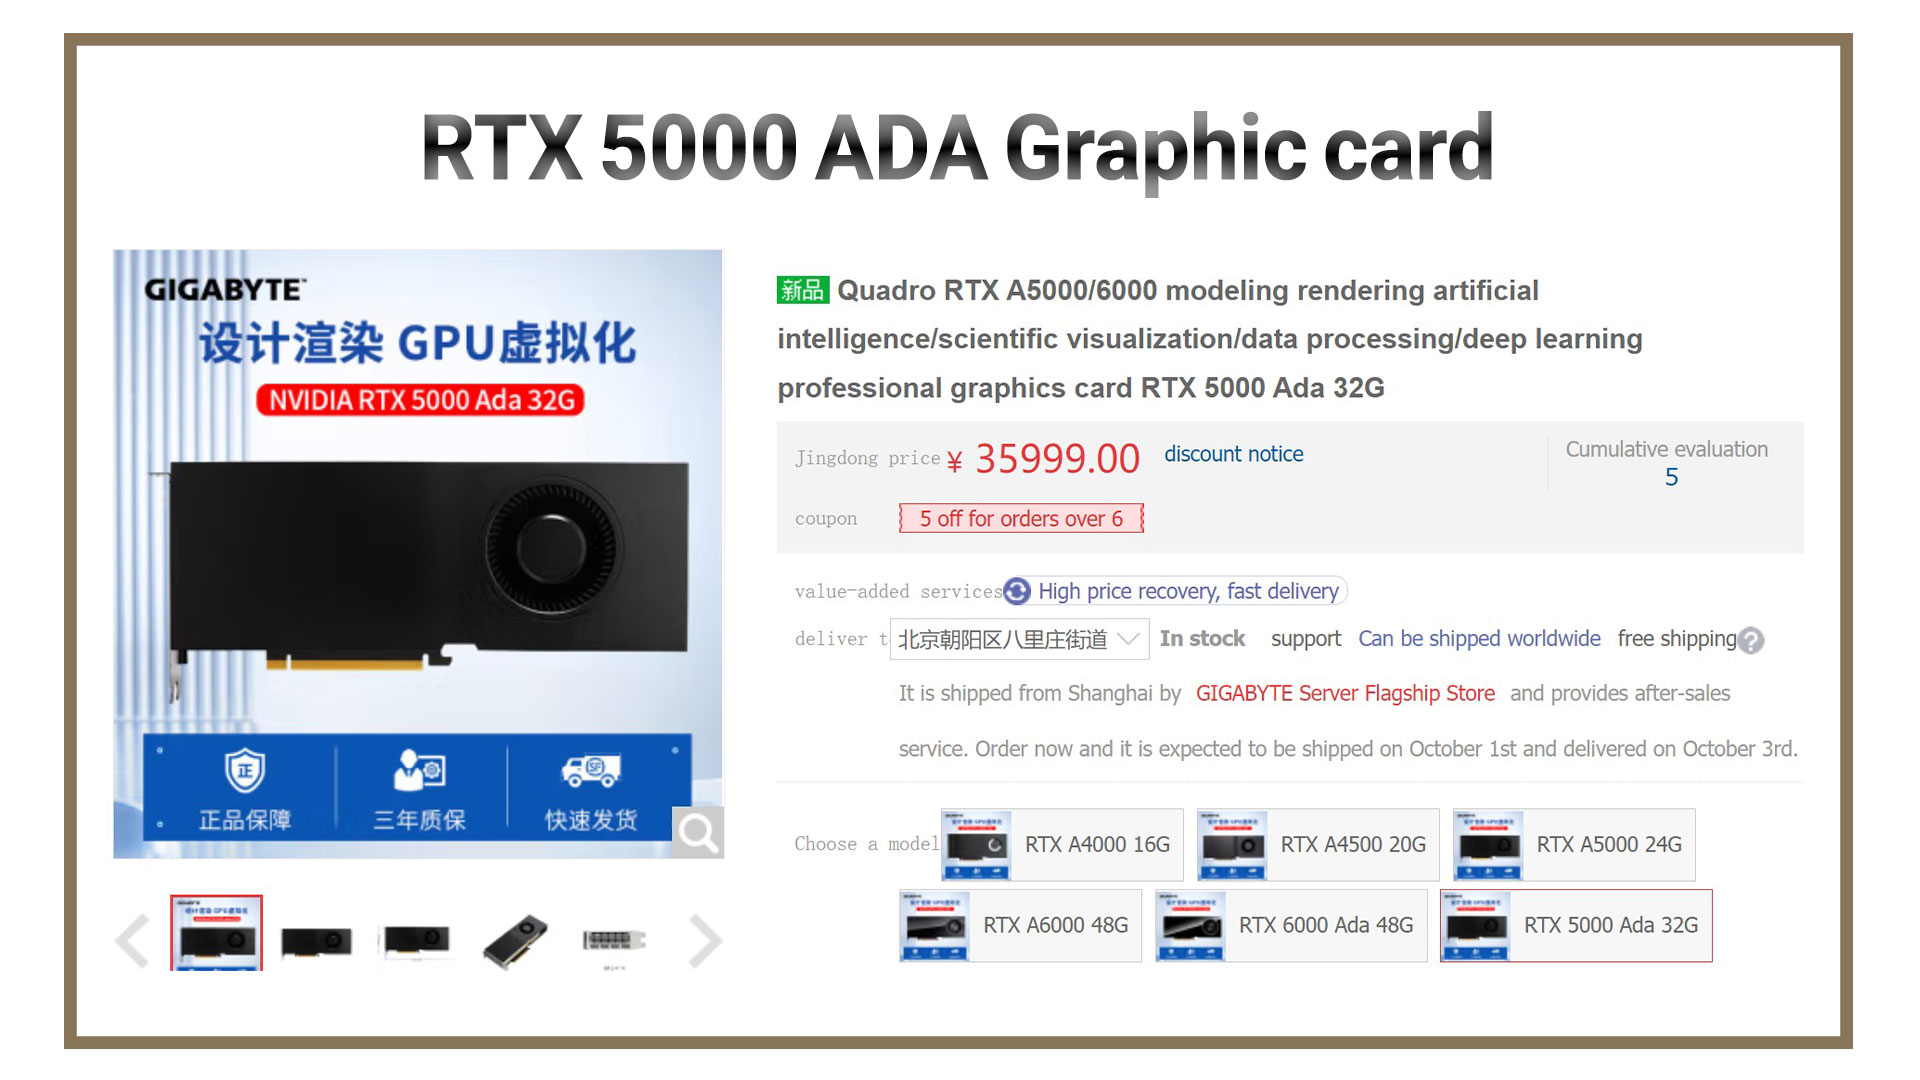 RTX 5000 ADA graphics card